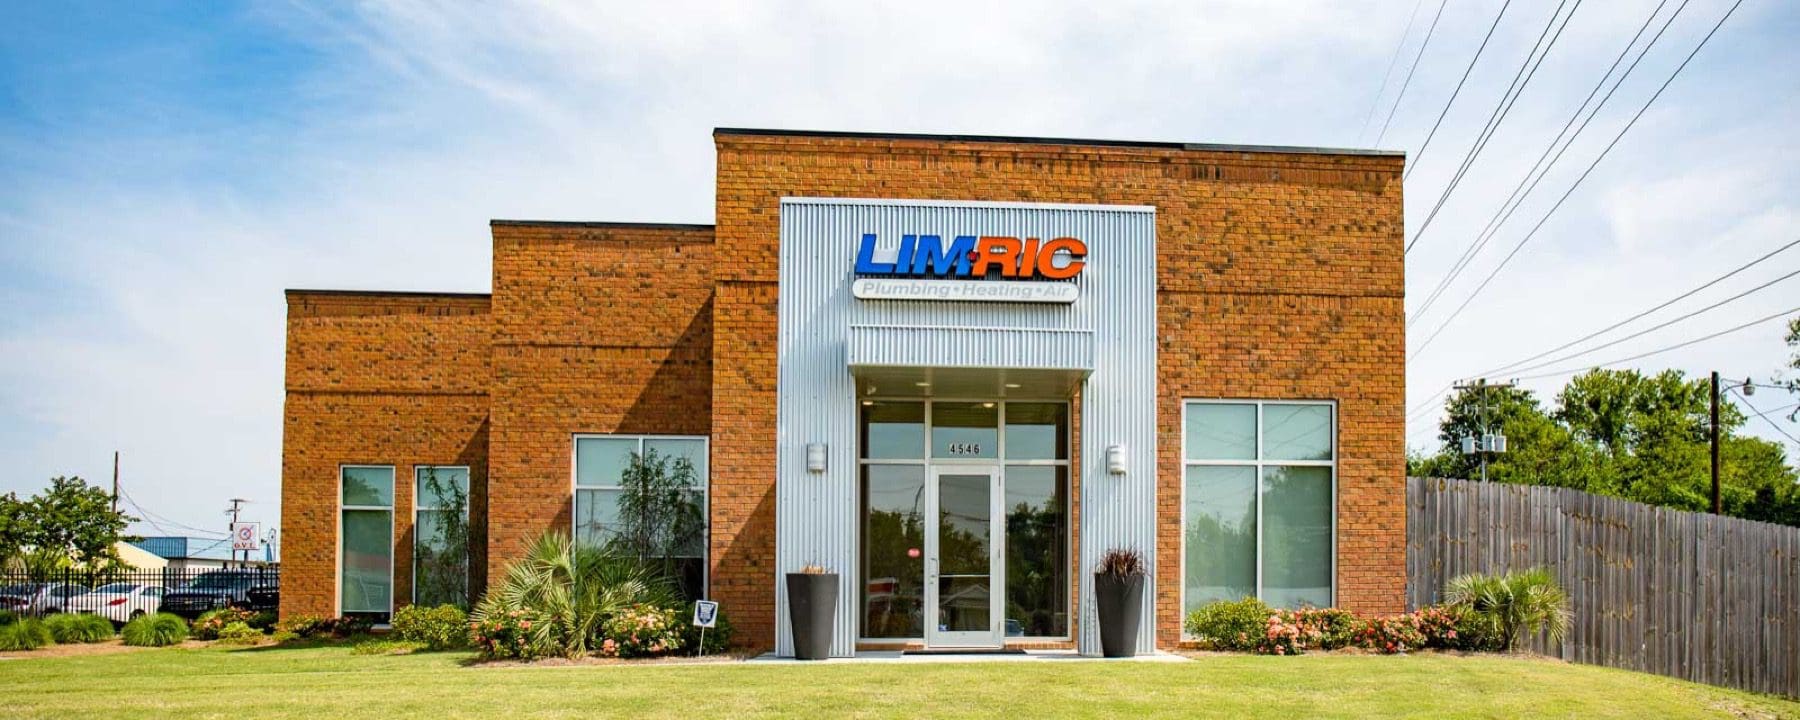 LimRic-Heating-Air- Customer Portal